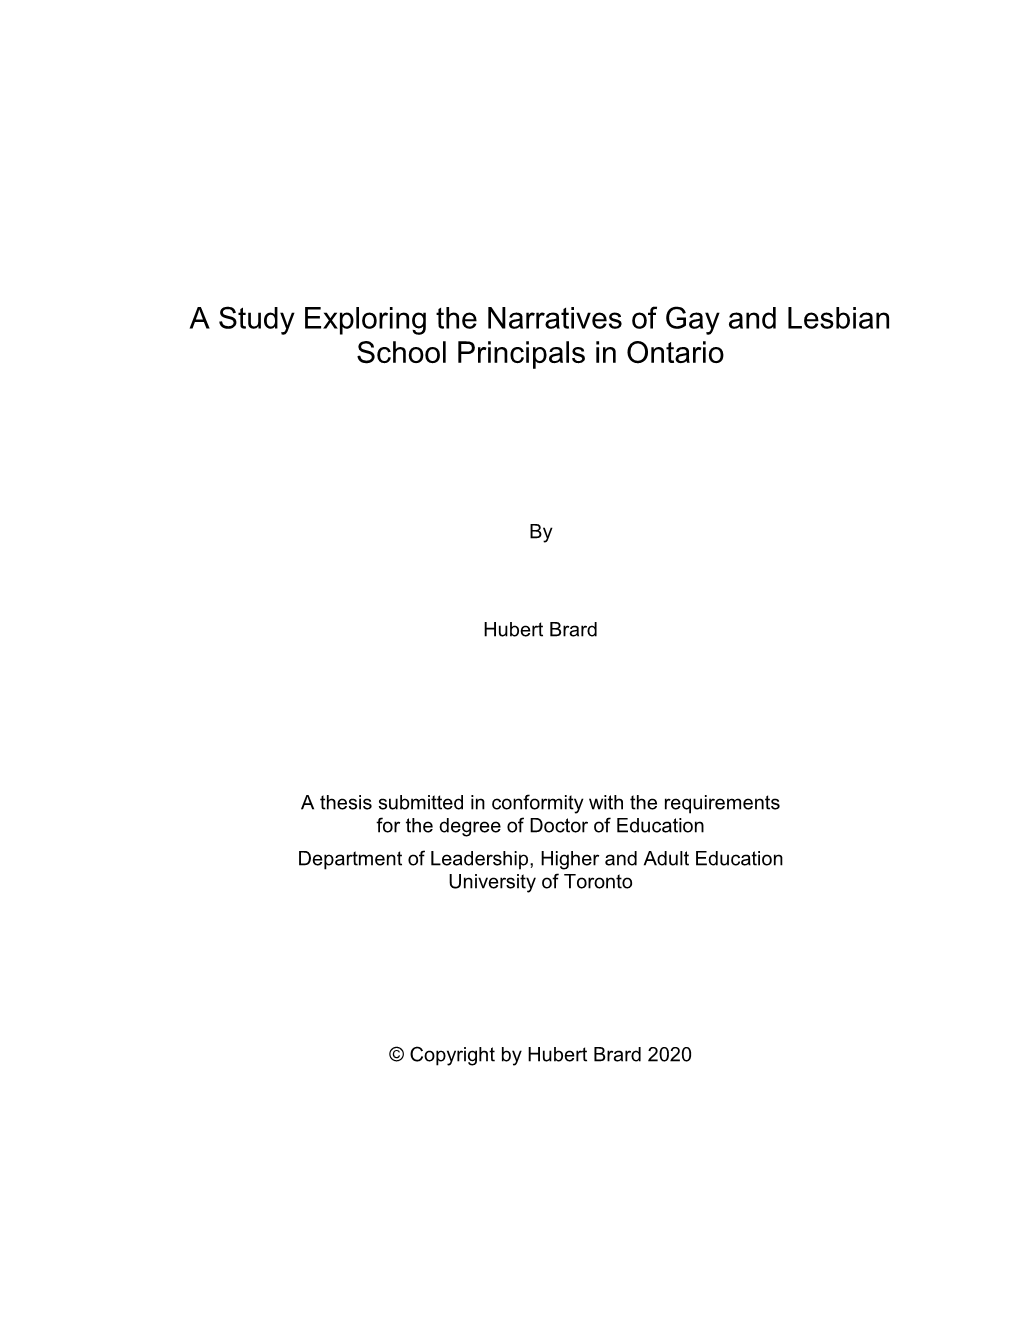 A Study Exploring the Narratives of Gay and Lesbian School Principals in Ontario